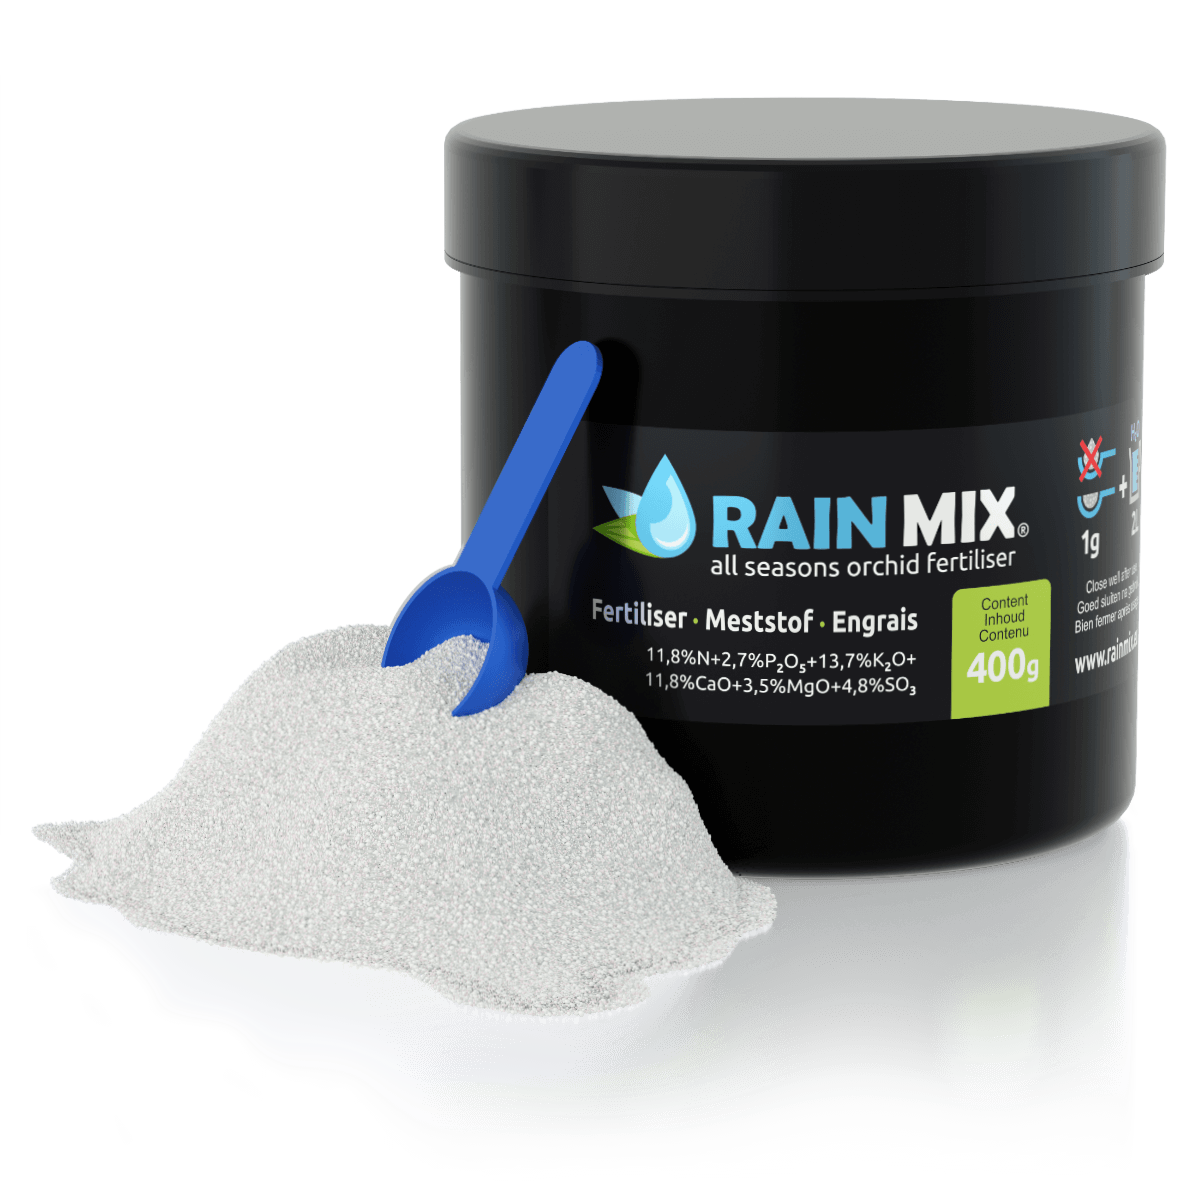 RAIN MIX product